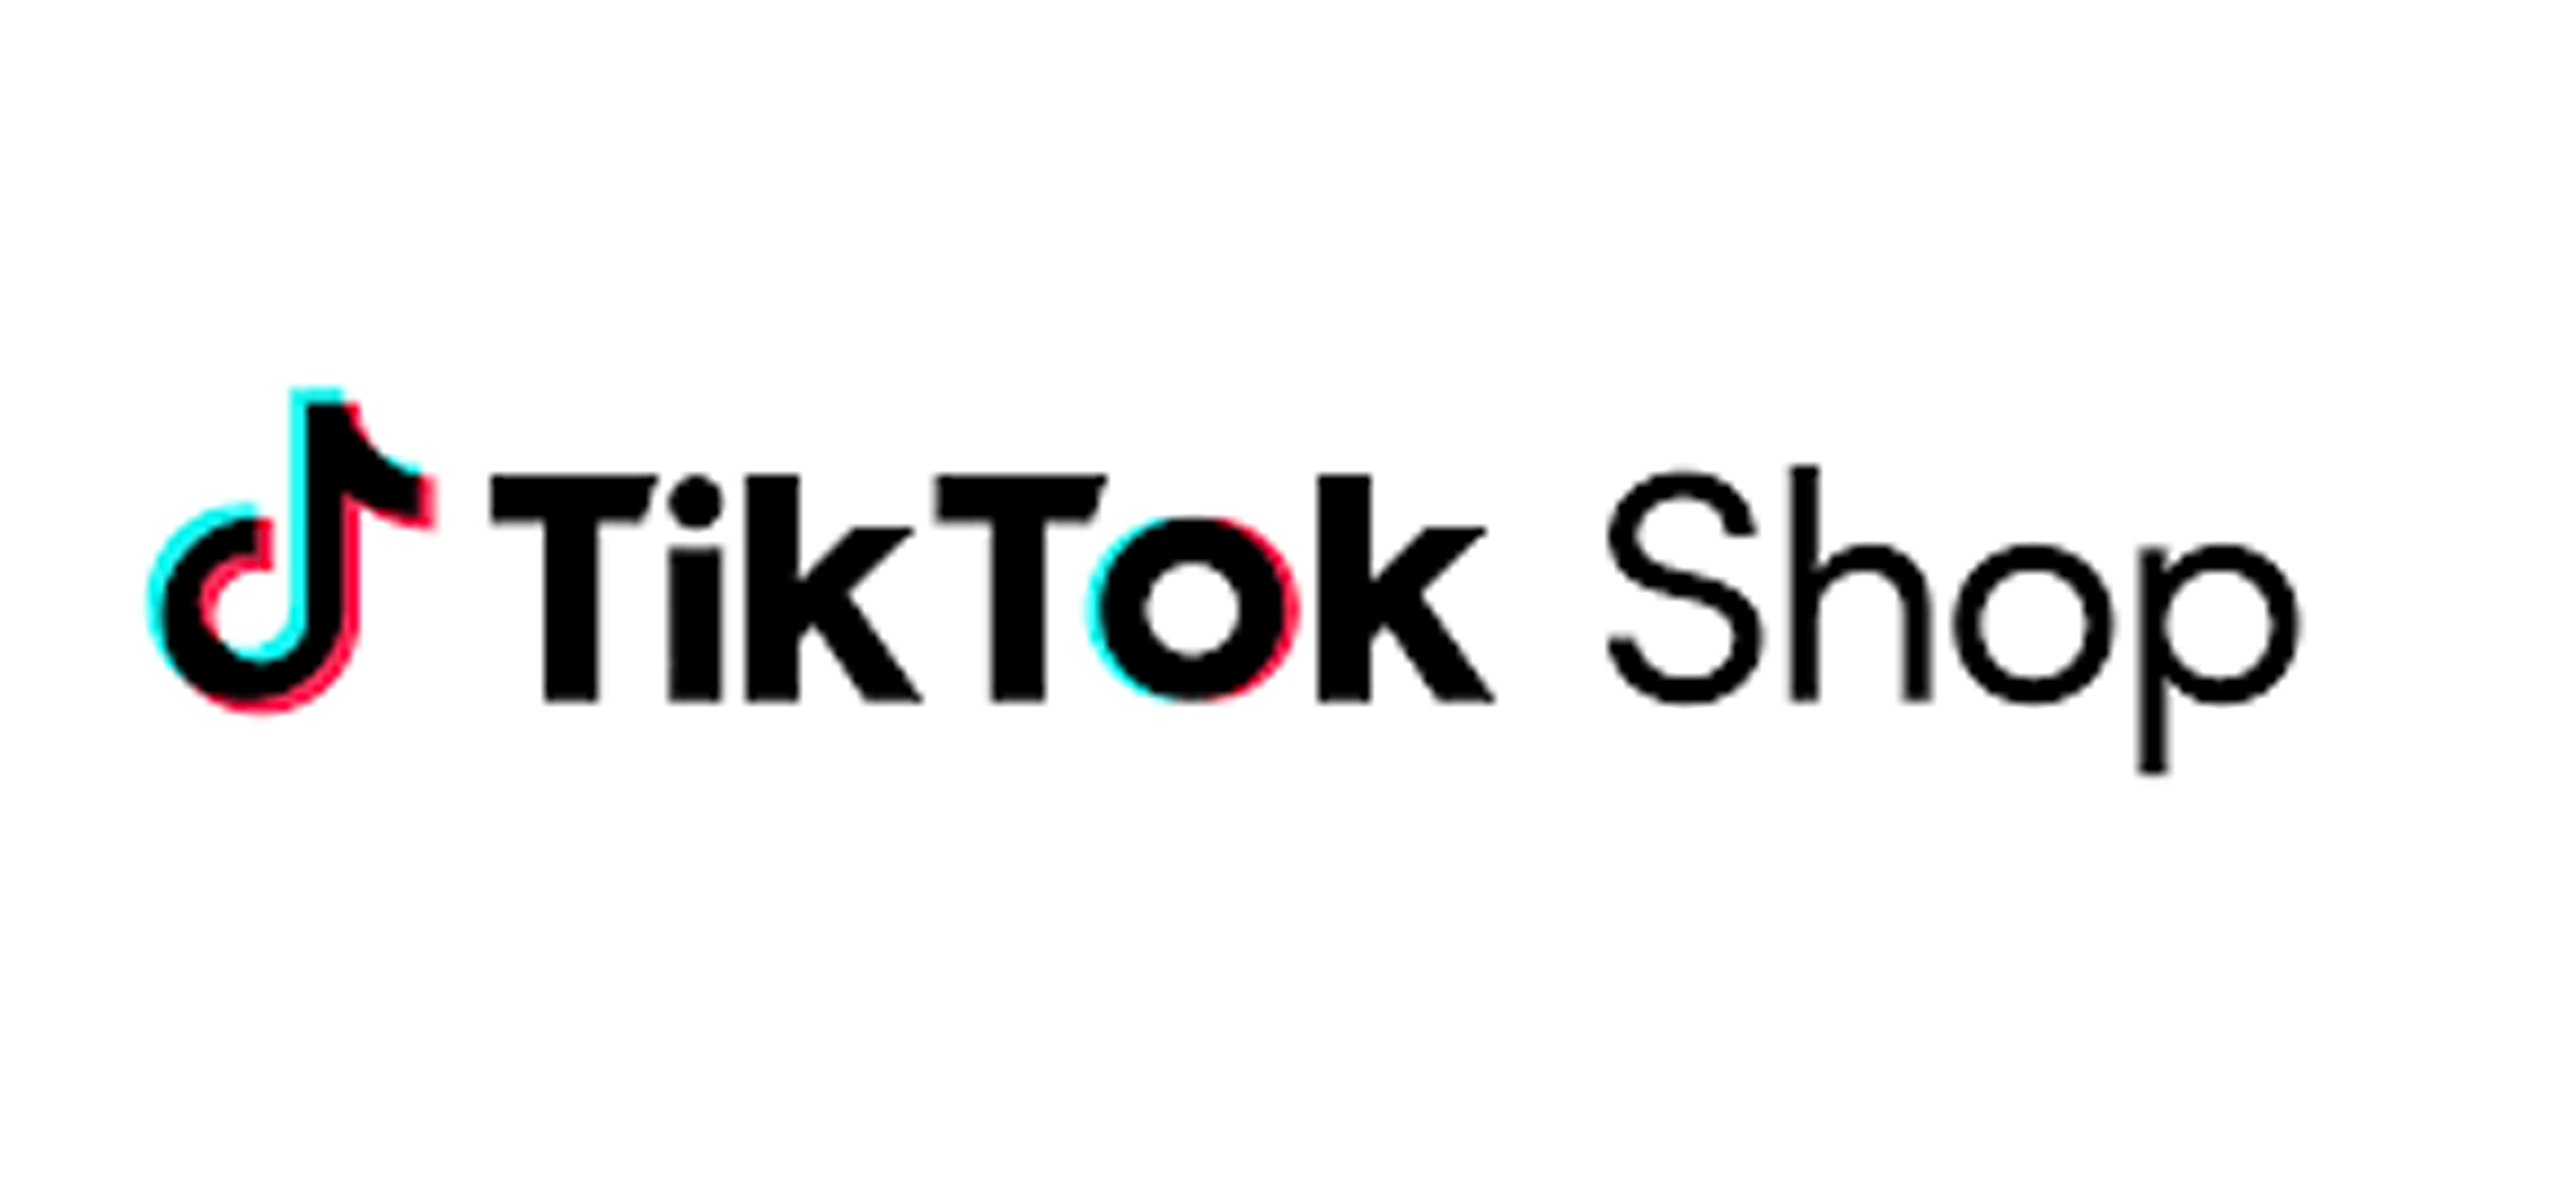 tiktok-shop-horizontal-logo